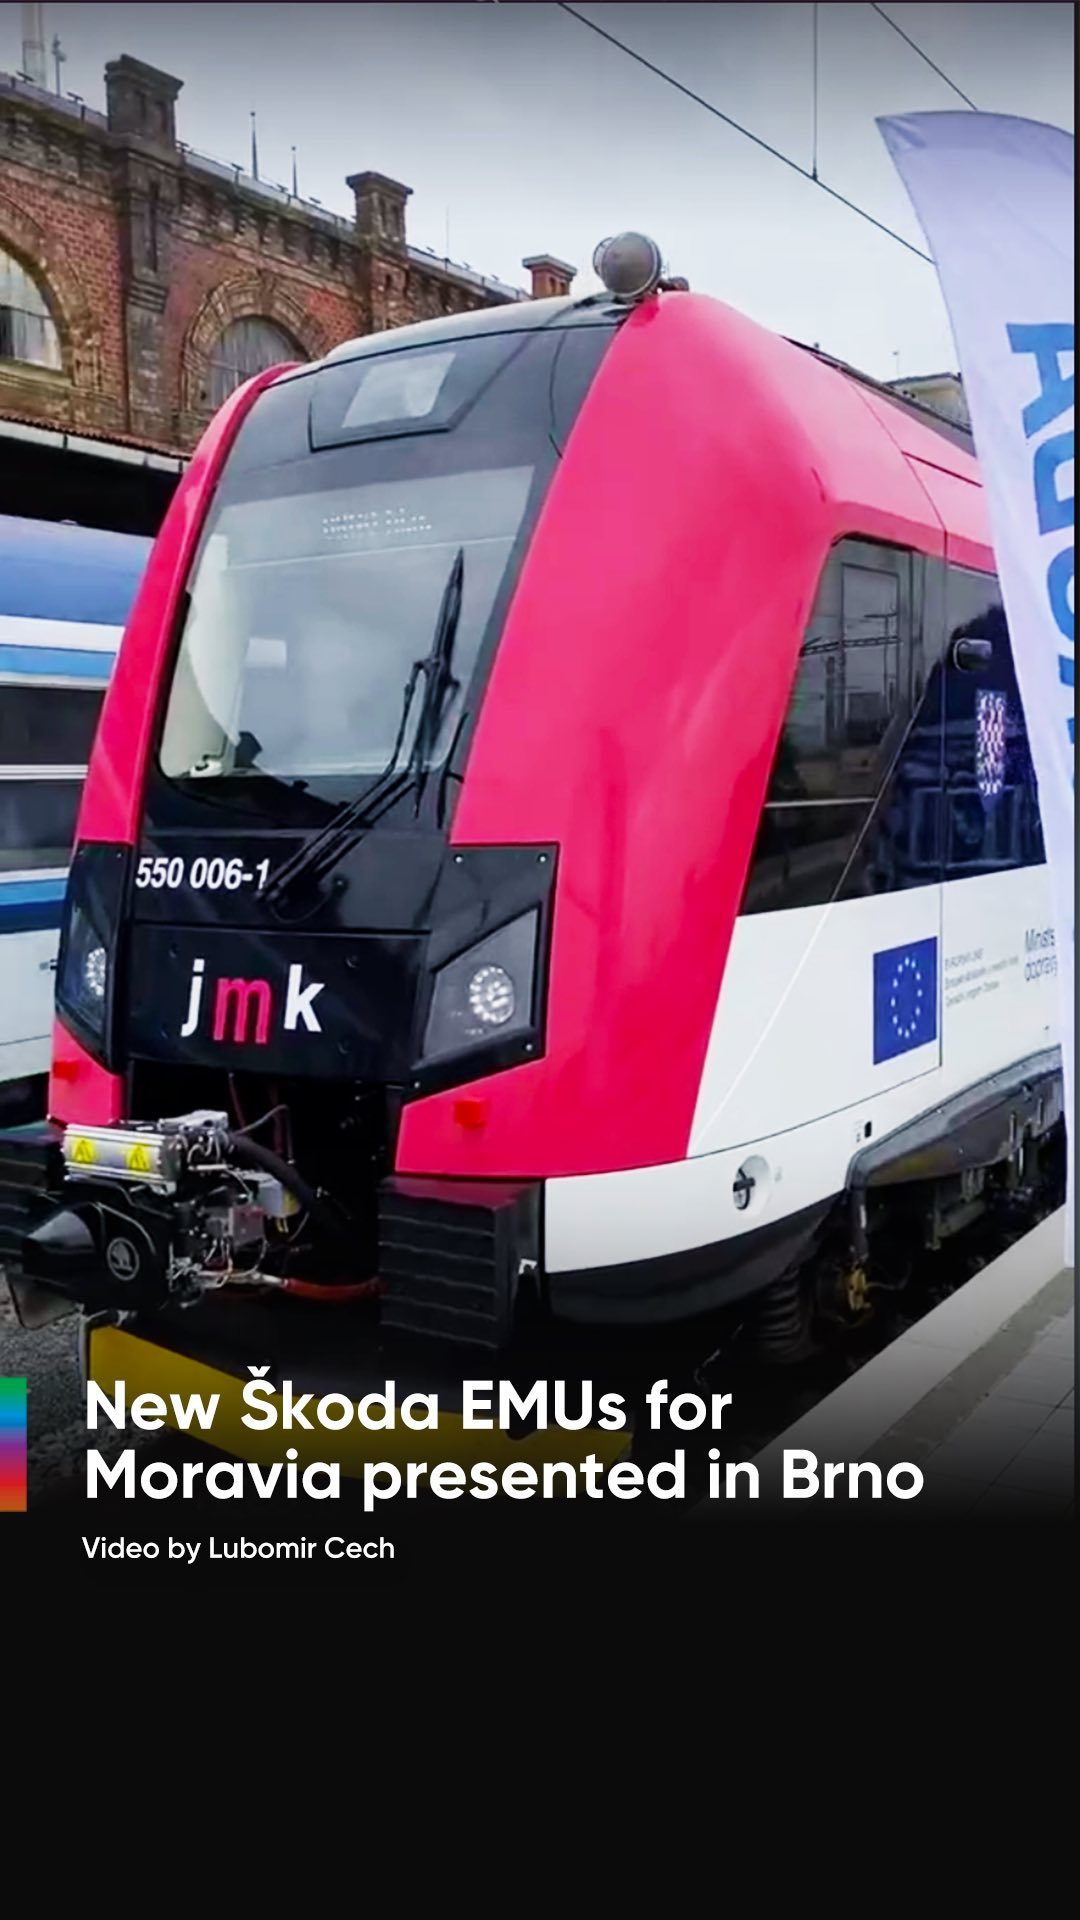 🎥 by Lubomir Cech 🇸🇰 New Moravia Škoda EMU’s presented in Brno 🇨🇿 Read more on RailcolorNews.com ➡️ 

. 

. 

.

.

#skoda #skoda7ev #moravia #škoda #skodatransportation #JMK #vlaky #brnohln #railways_of_europe #eisenbahnfotografie #railwayphotography #tren #zeleznice #electriclocomotive #locomotive #eisenbahn #bahnphoto #railcolor #railways #railfans #emu #trainreels